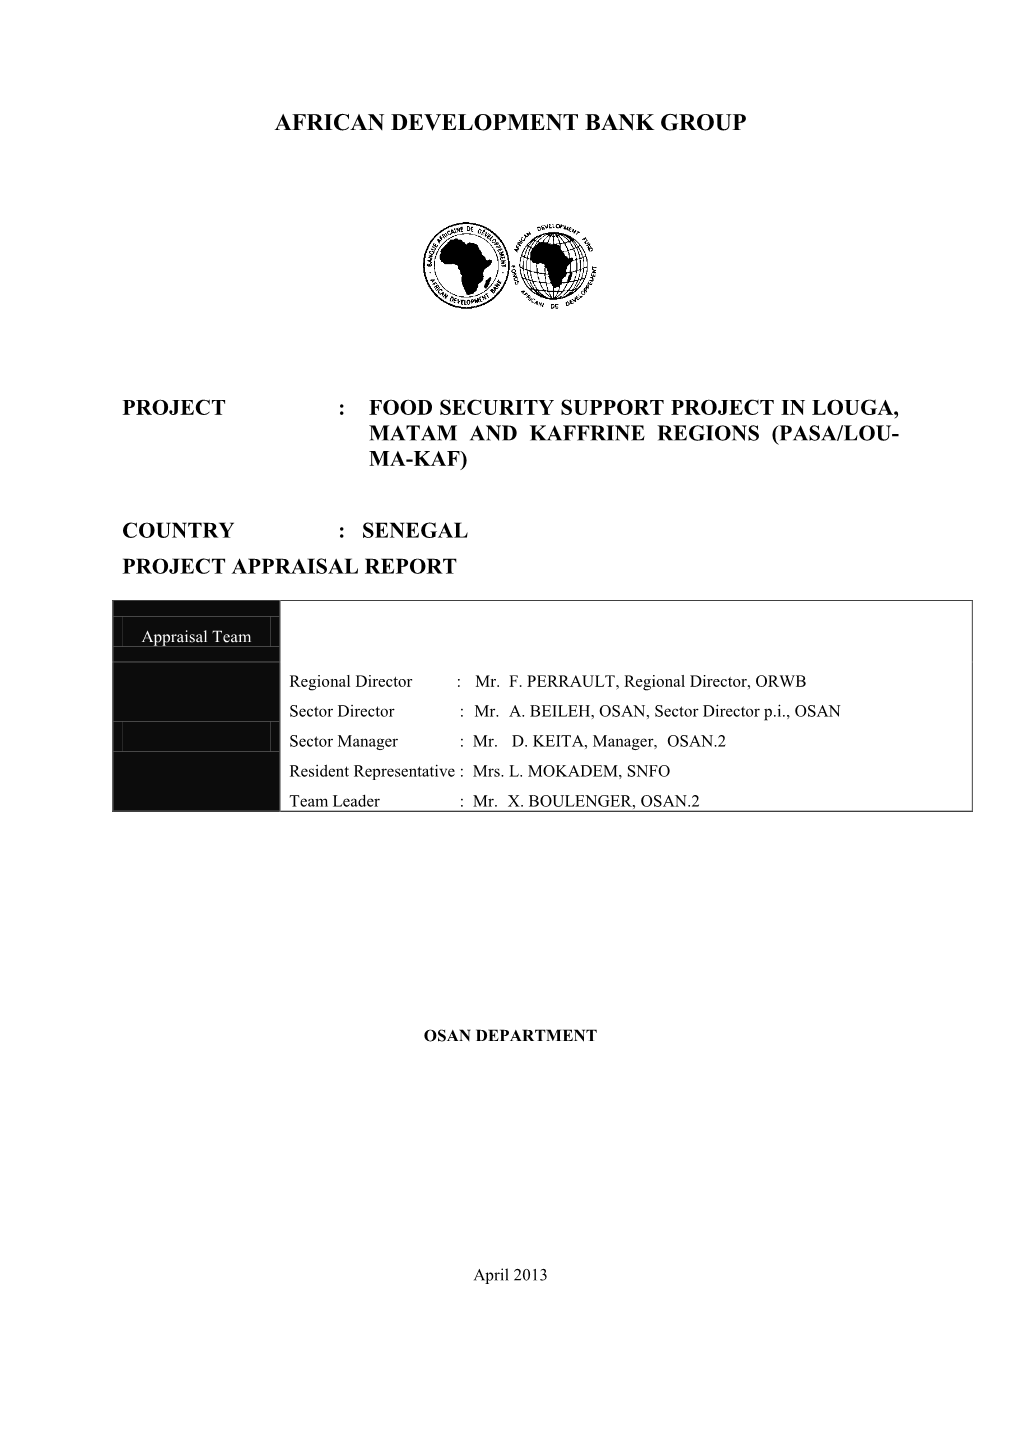 Senegal Project Appraisal Report